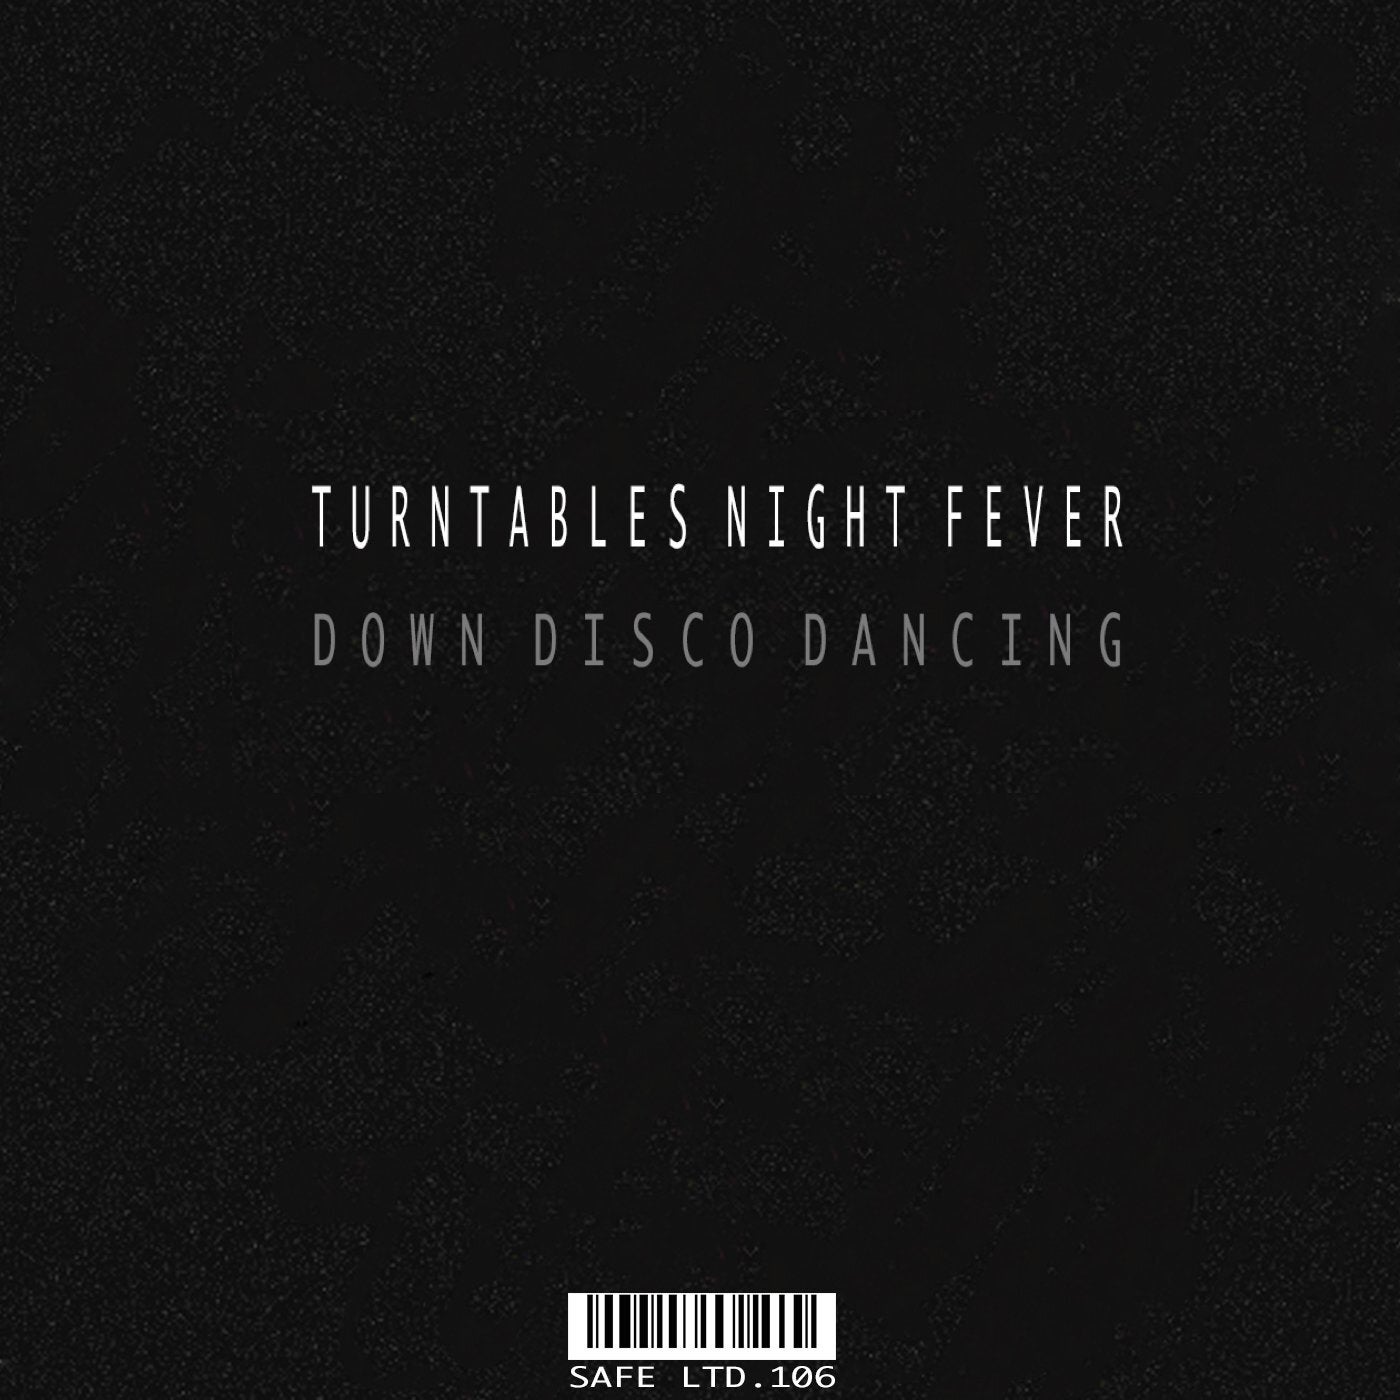 Down Disco Dancing EP